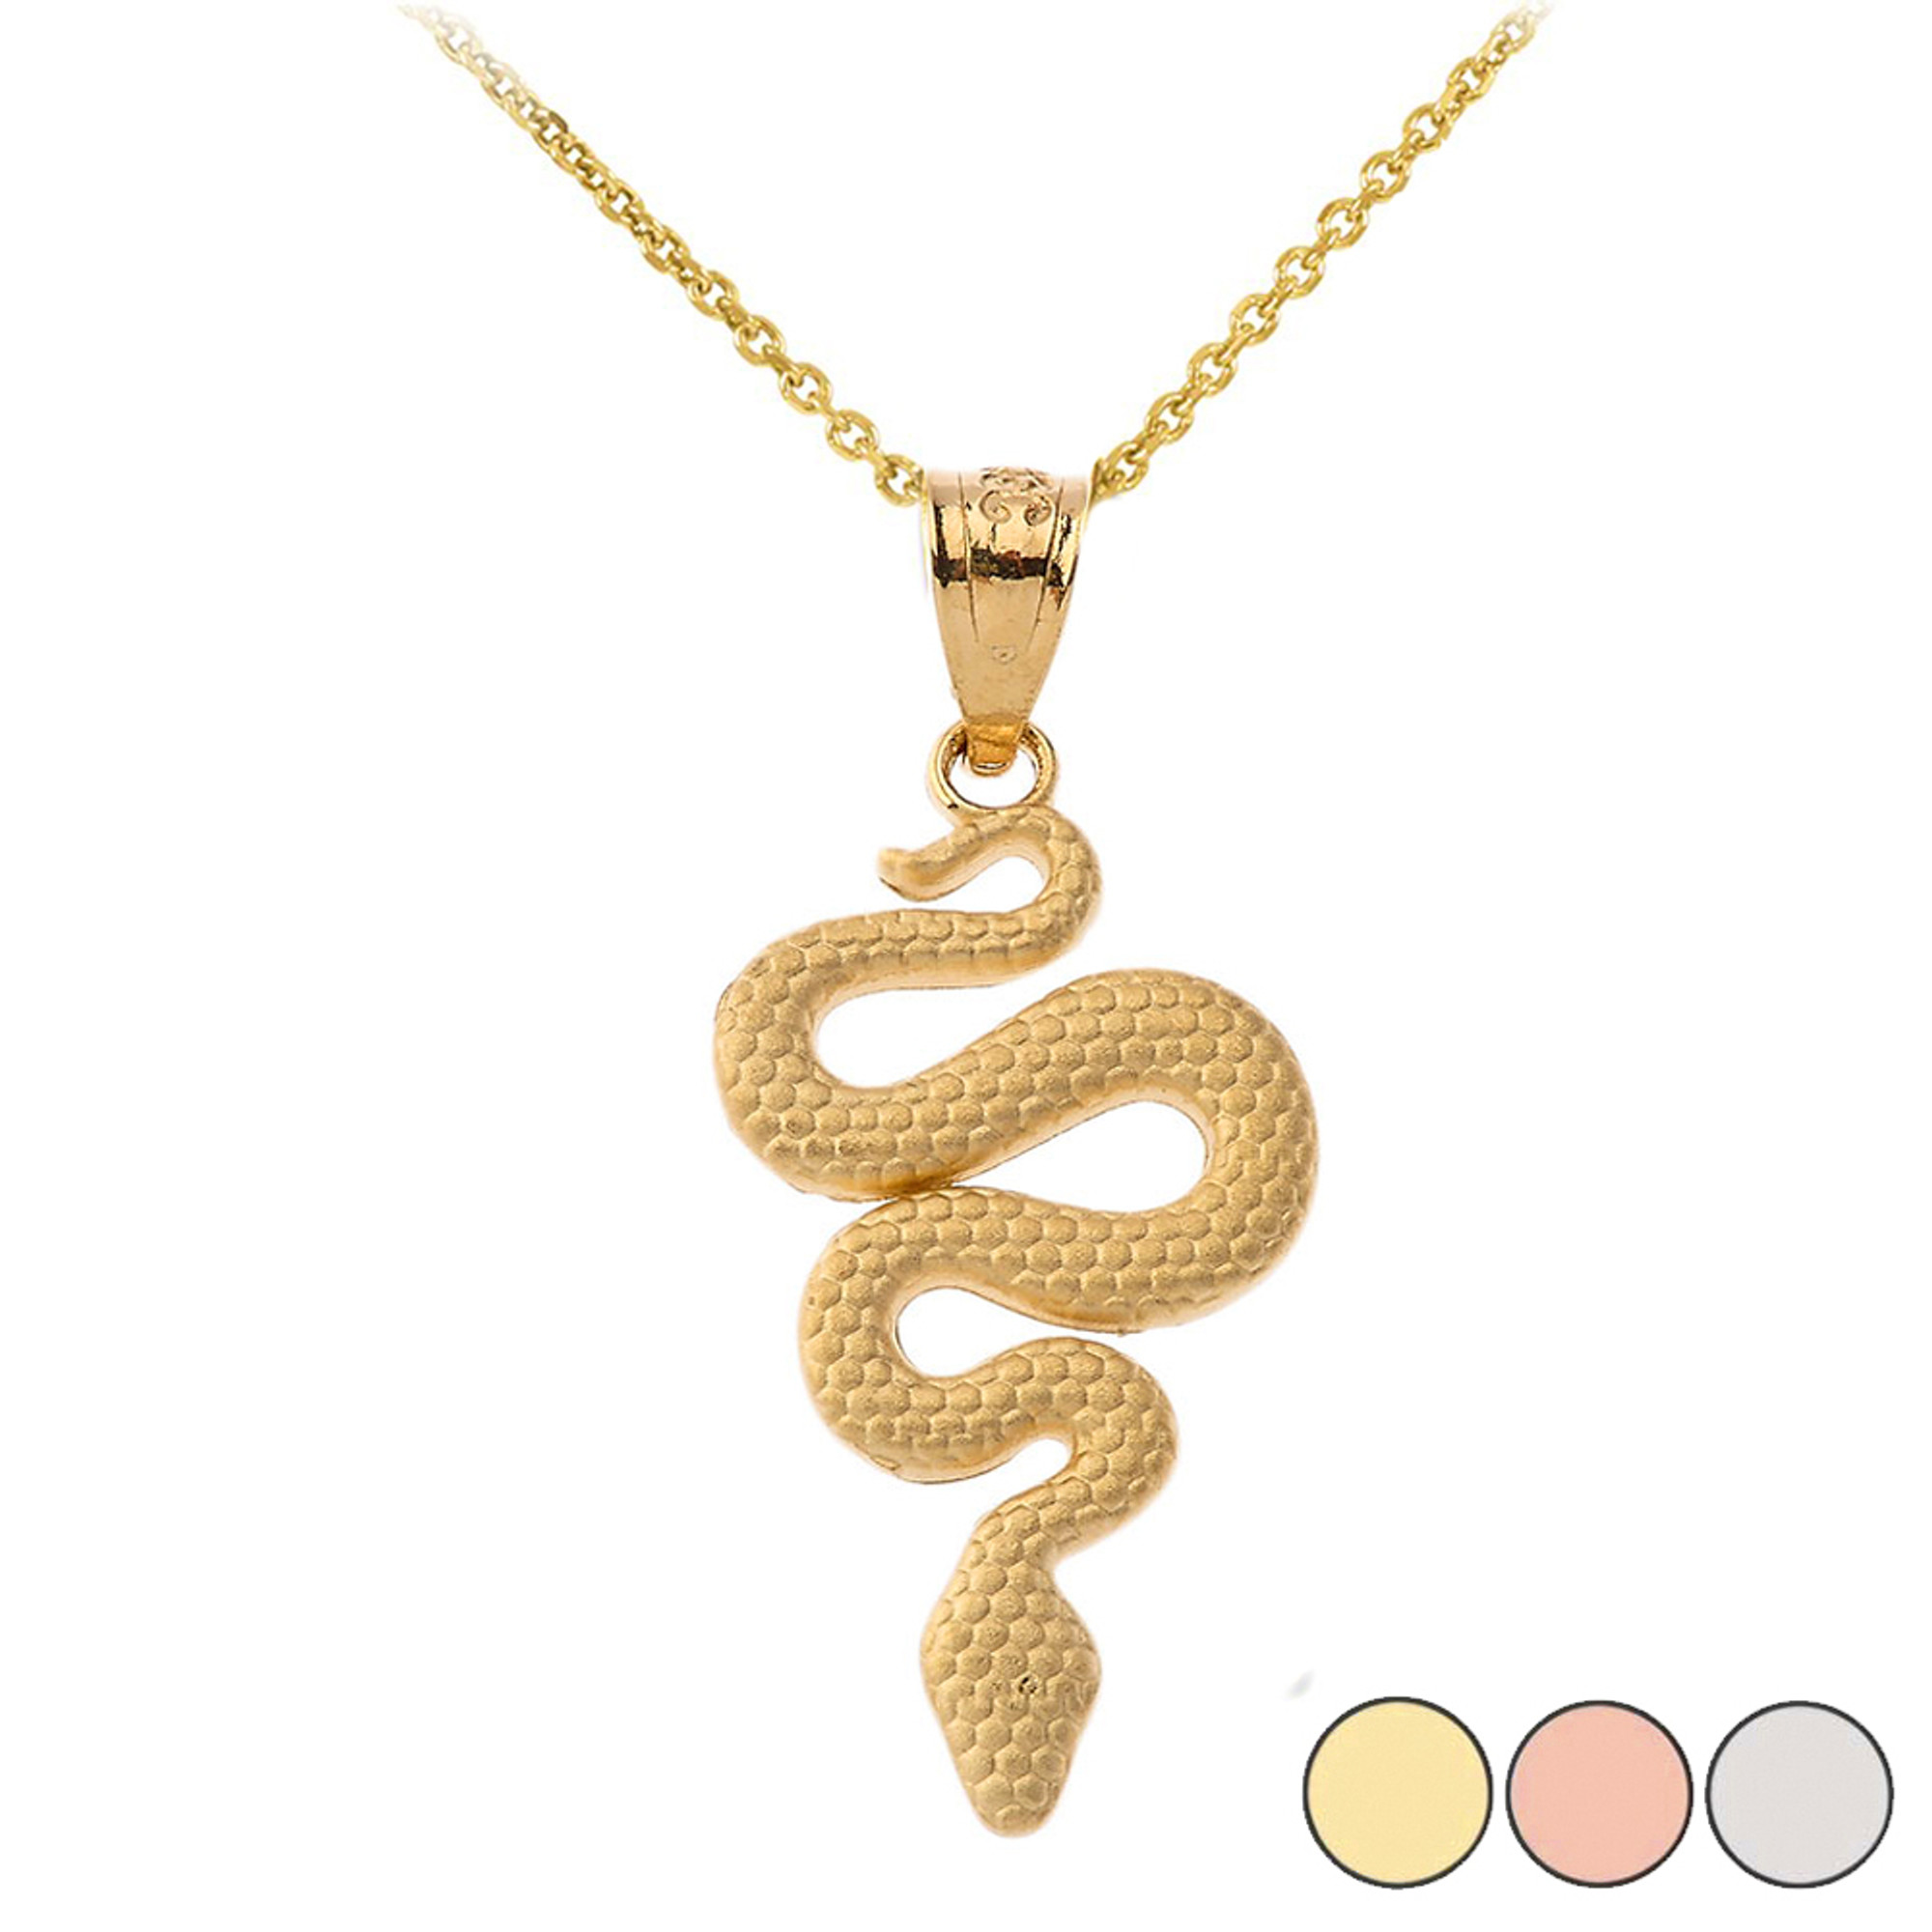 Aurora Designer - 15mm Ouroboros Snake 14K Gold Pendant Charm